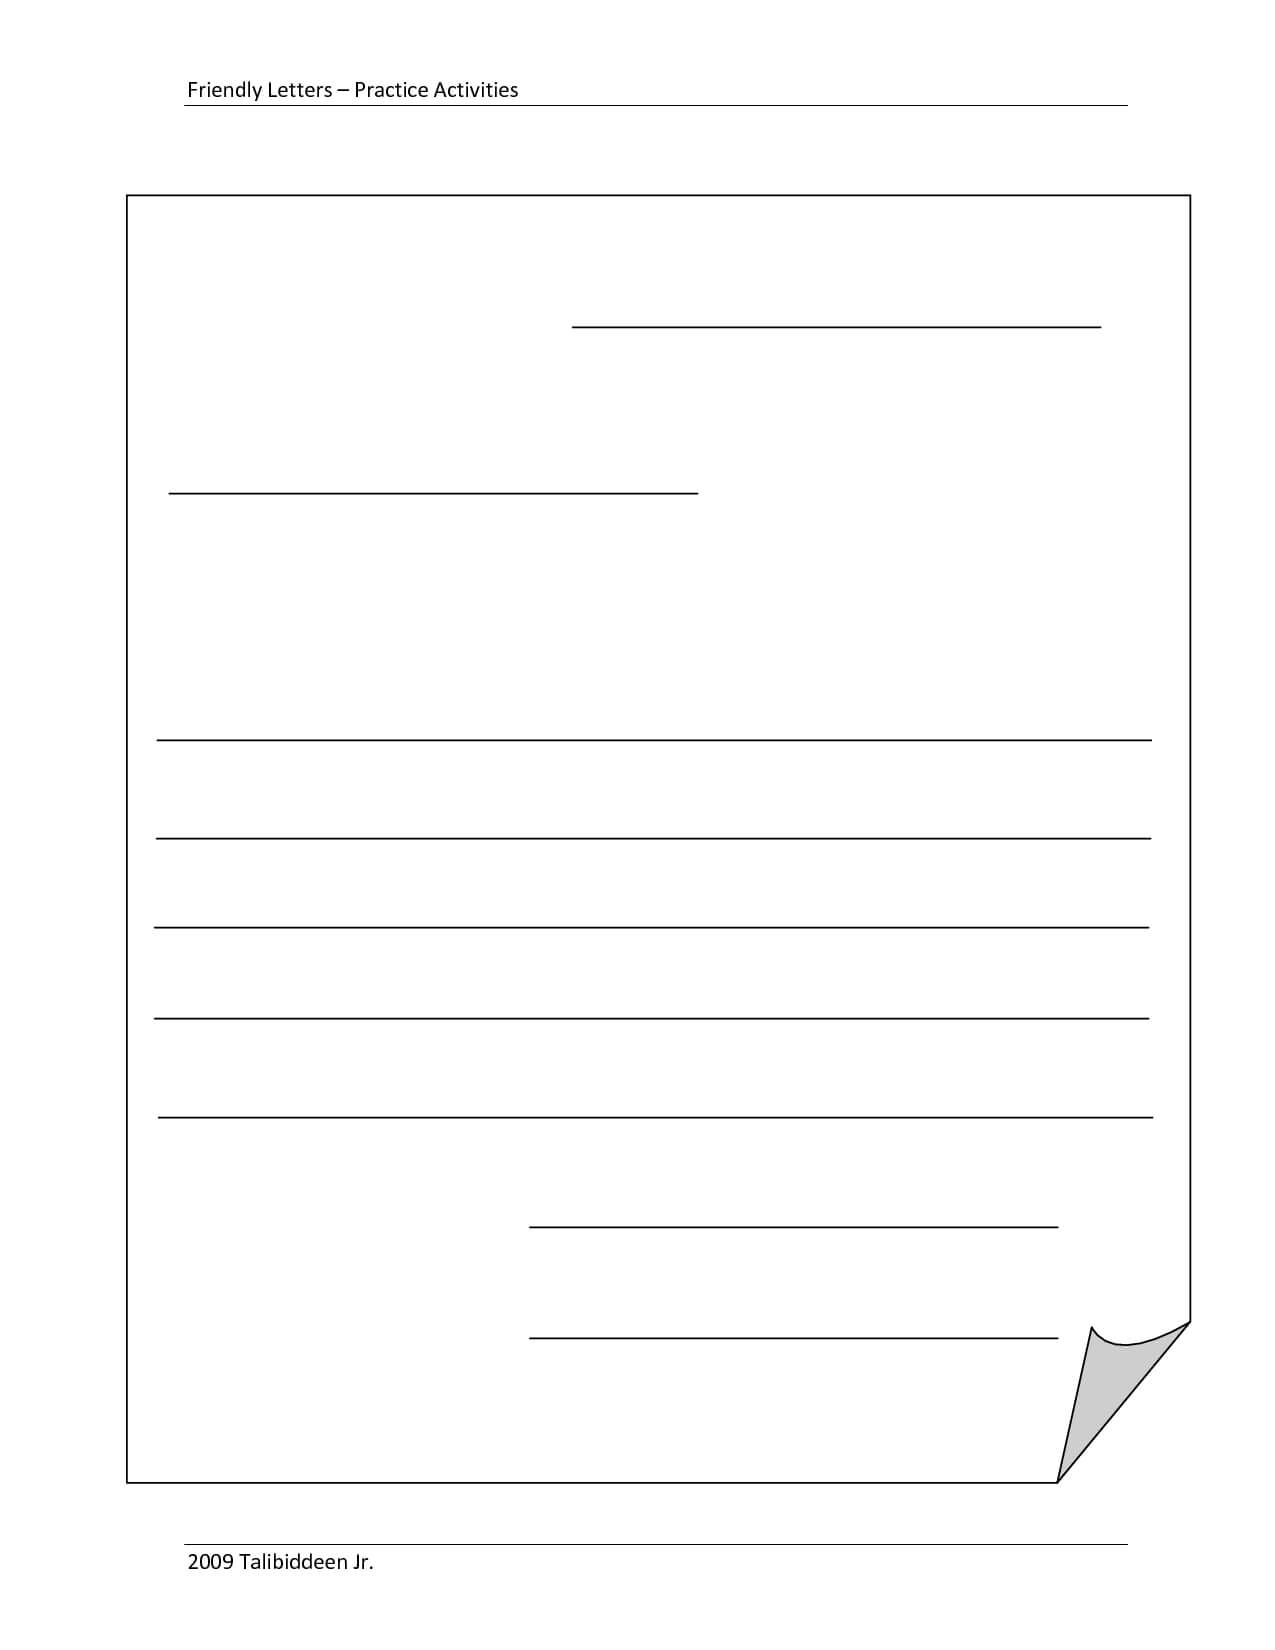 Blank+Letter+Format+Template | Friendly Letter, Letter Within Blank Letter Writing Template For Kids